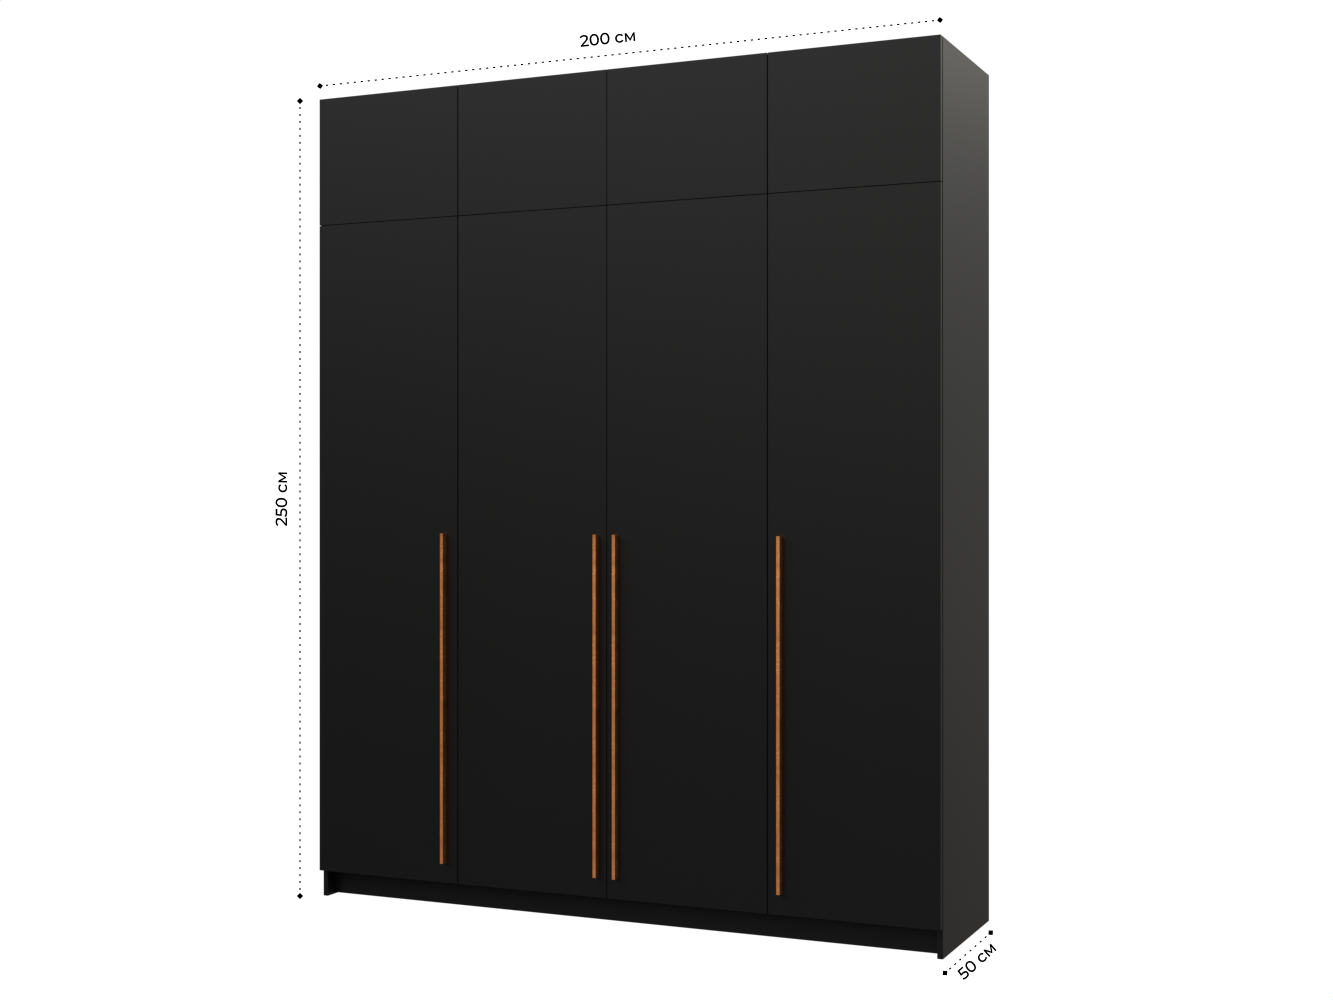 Распашной шкаф Пакс Фардал 47 black ИКЕА (IKEA) изображение товара